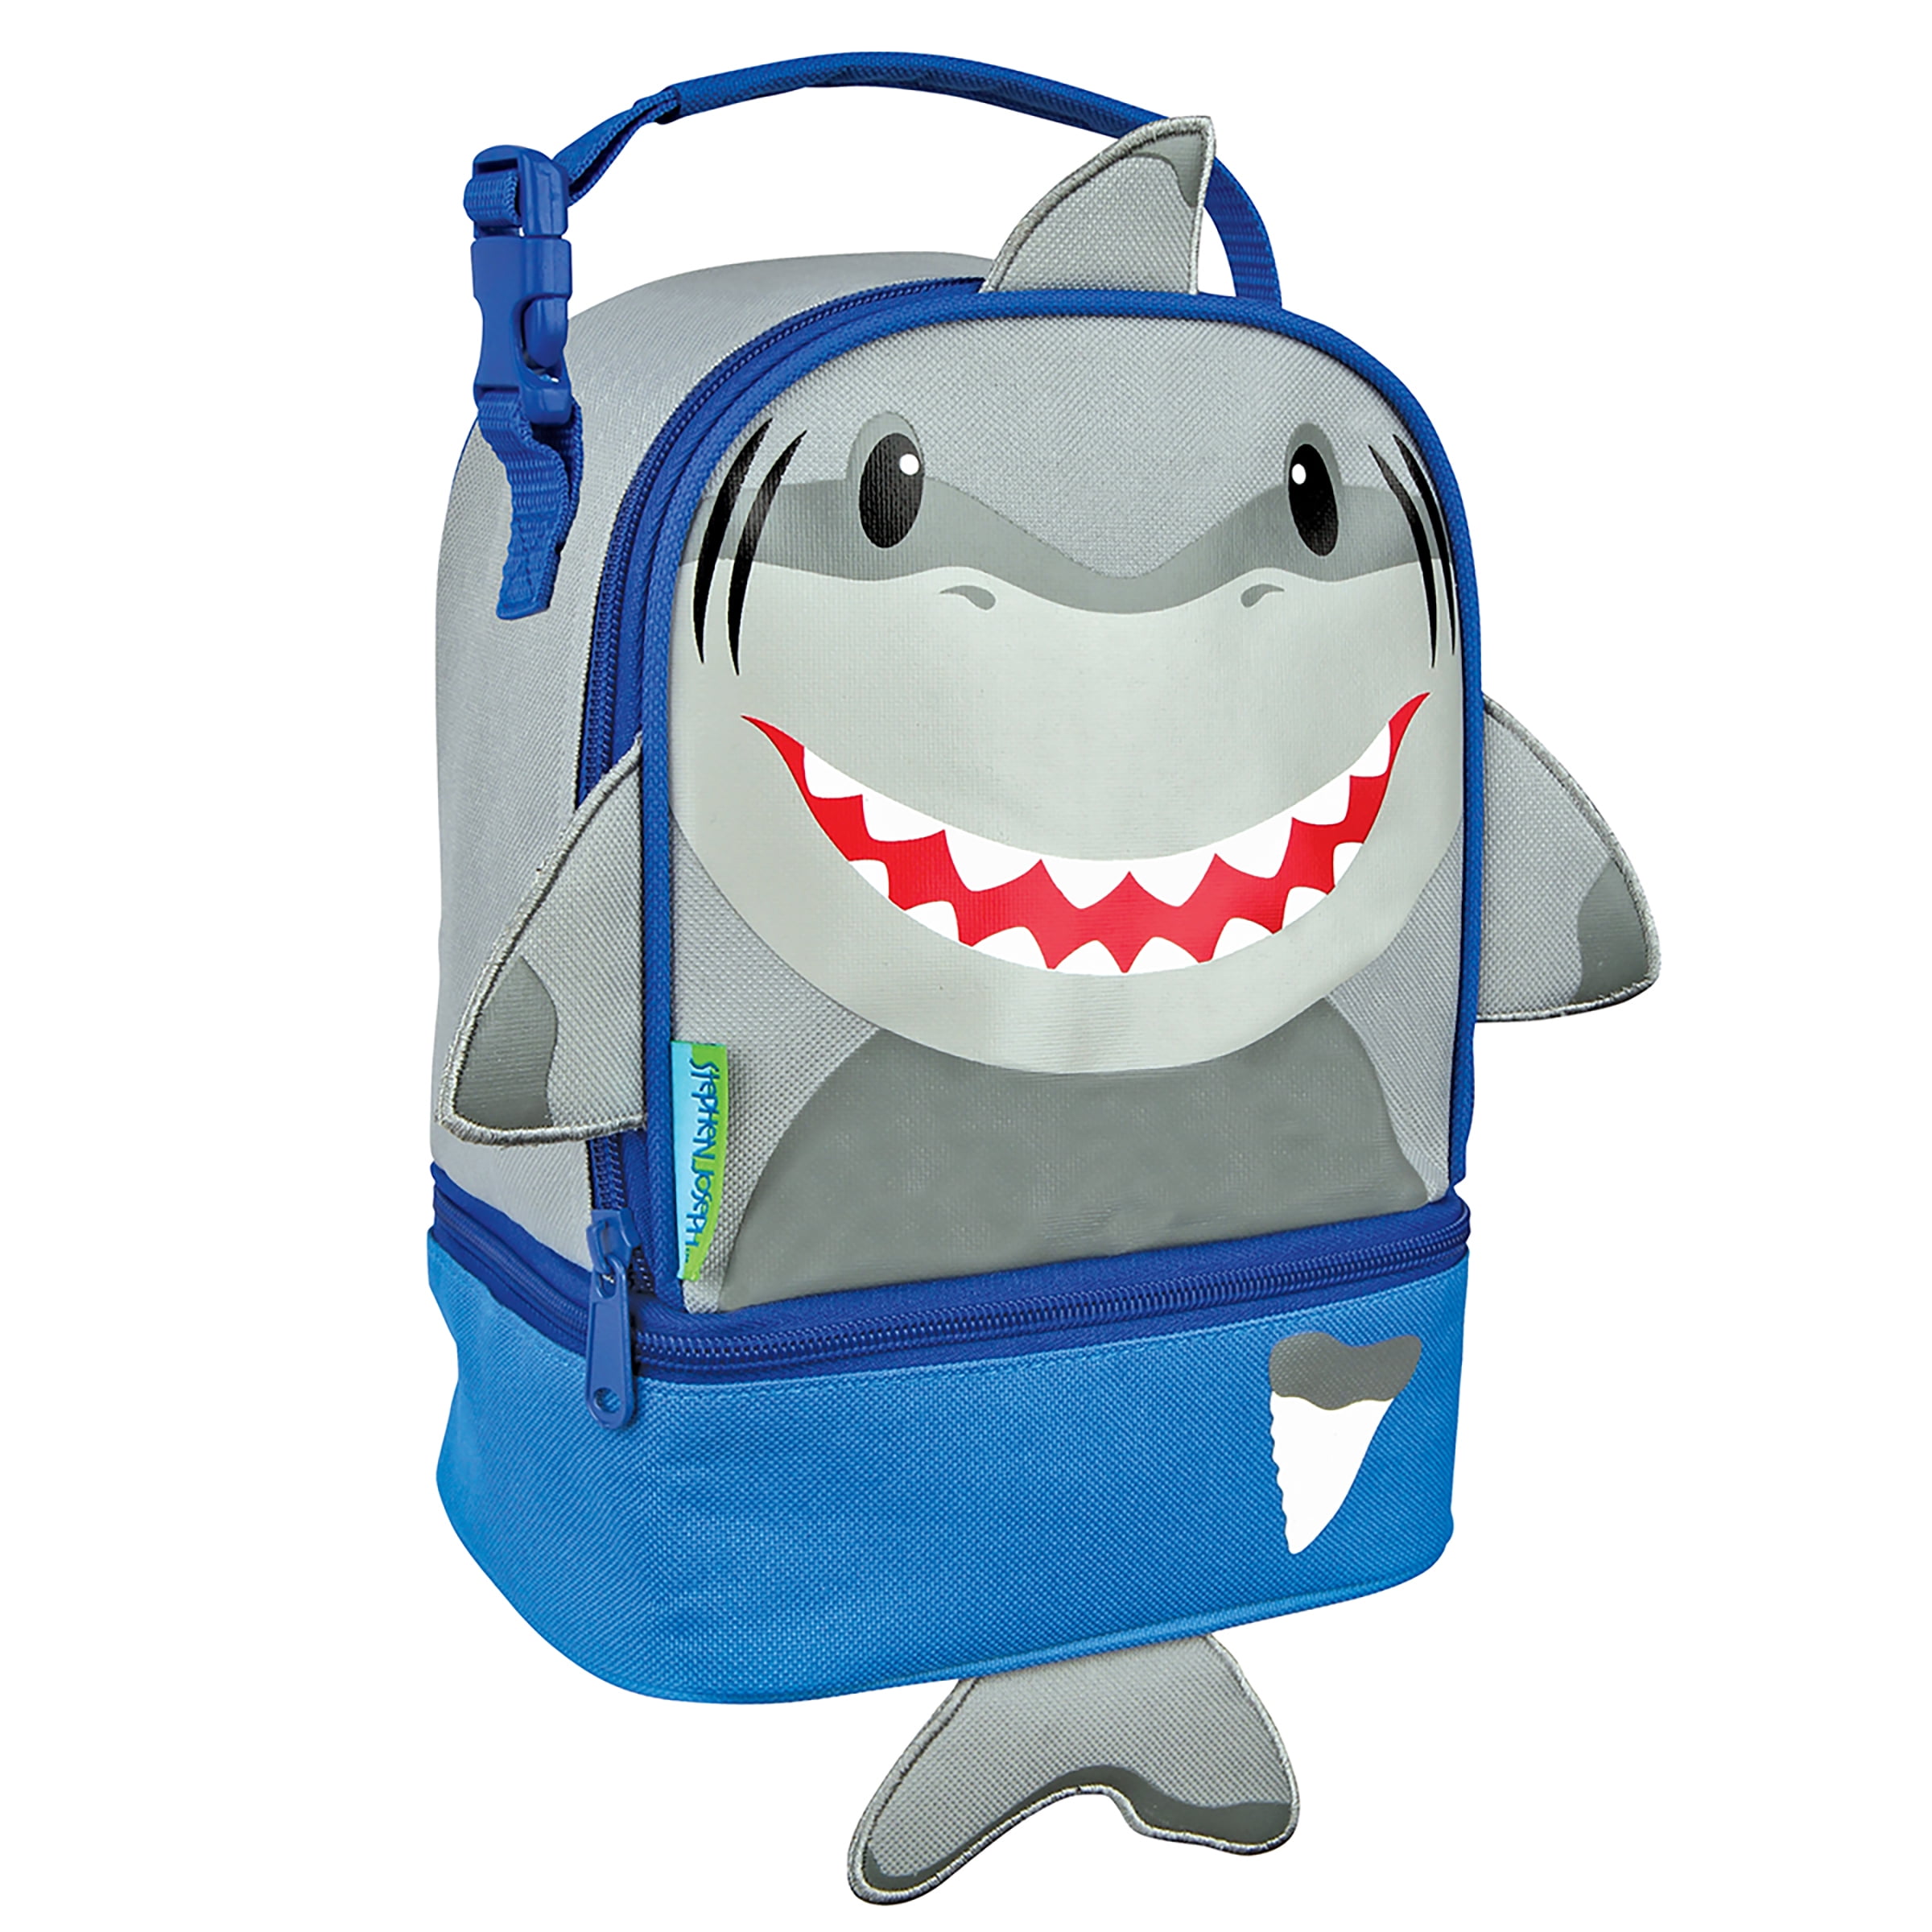 Personalized Stephen Joseph shark lunch box